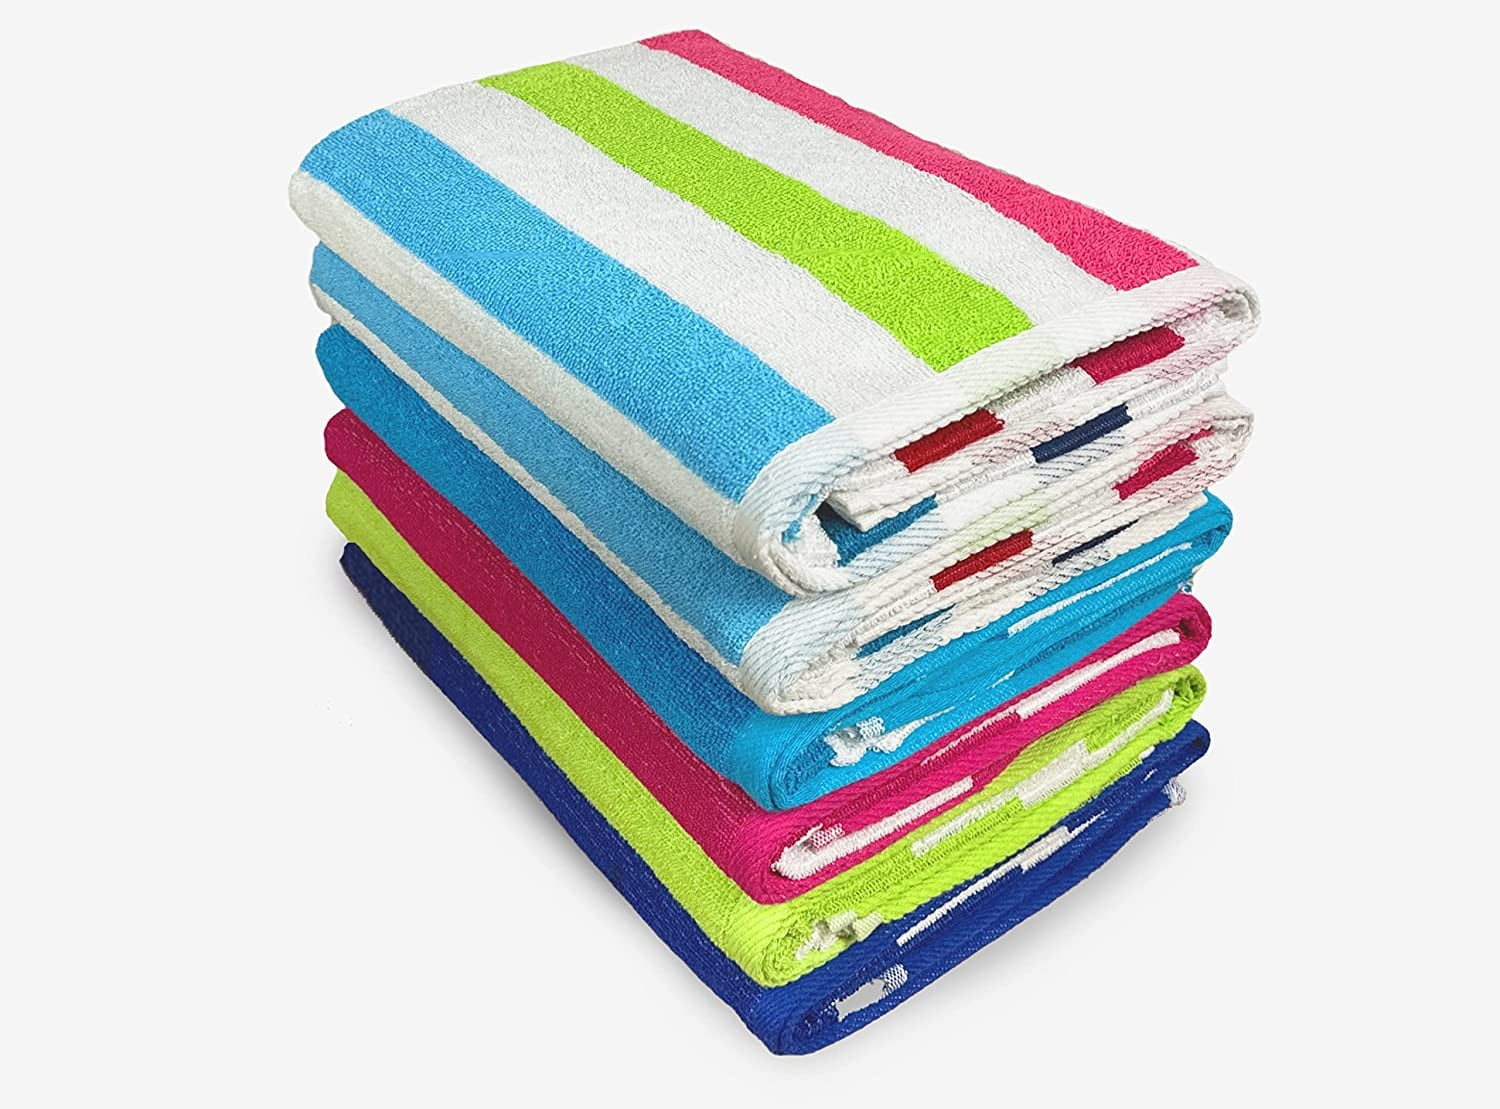 Utopia Towels Cabana Stripe Beach Towels, 30 x 60 Inches - Large Pool Towels  (Bulk Pack of 24, Multi Color)